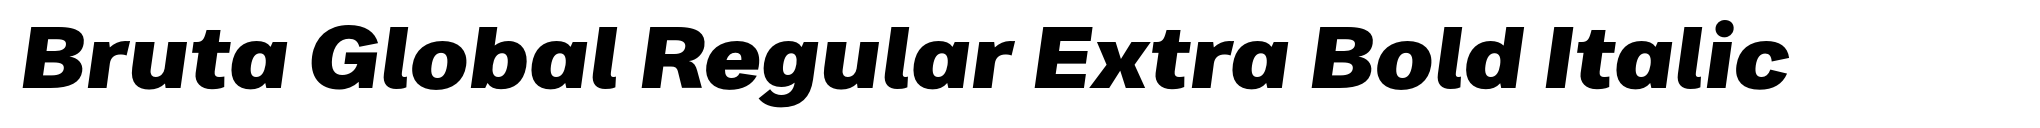 Bruta Global Regular Extra Bold Italic image